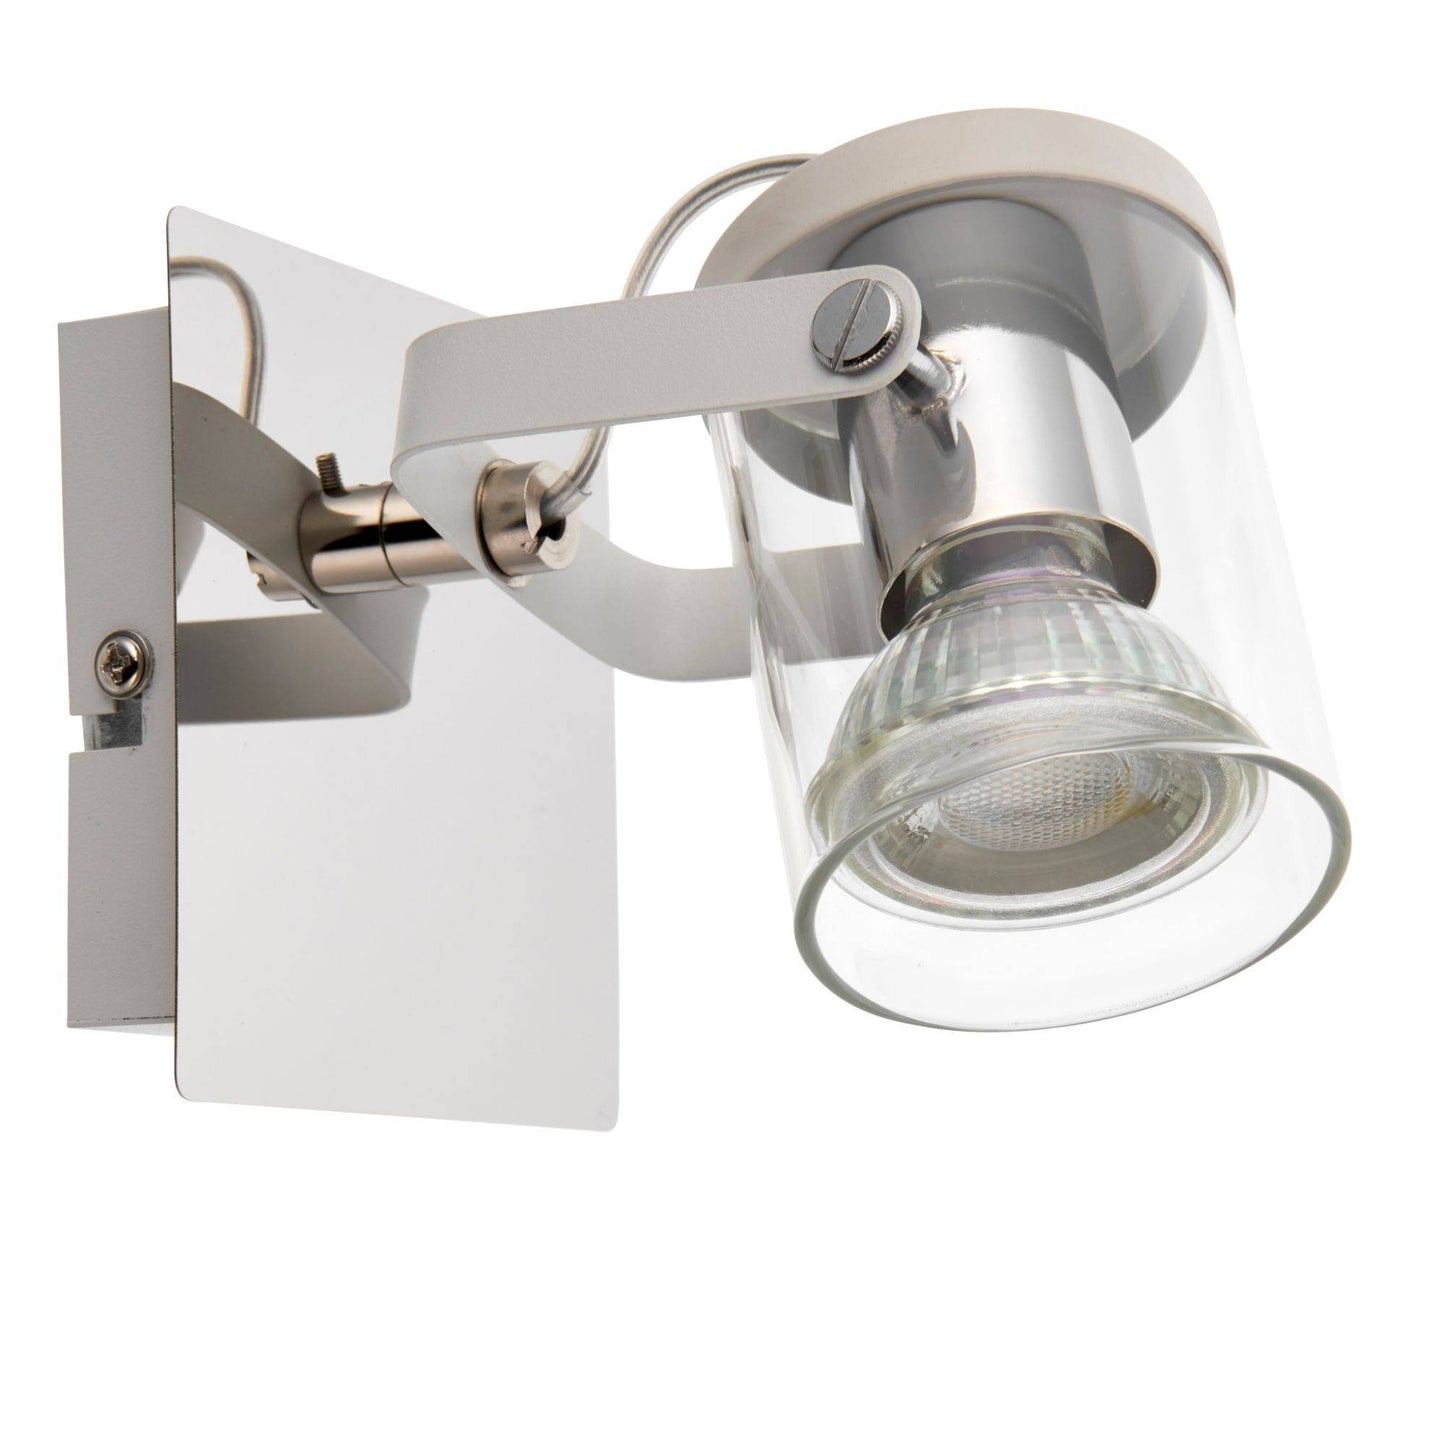 Errol 1 Light Polished Chrome and White Spotlight Ceiling Light with Glass Shade